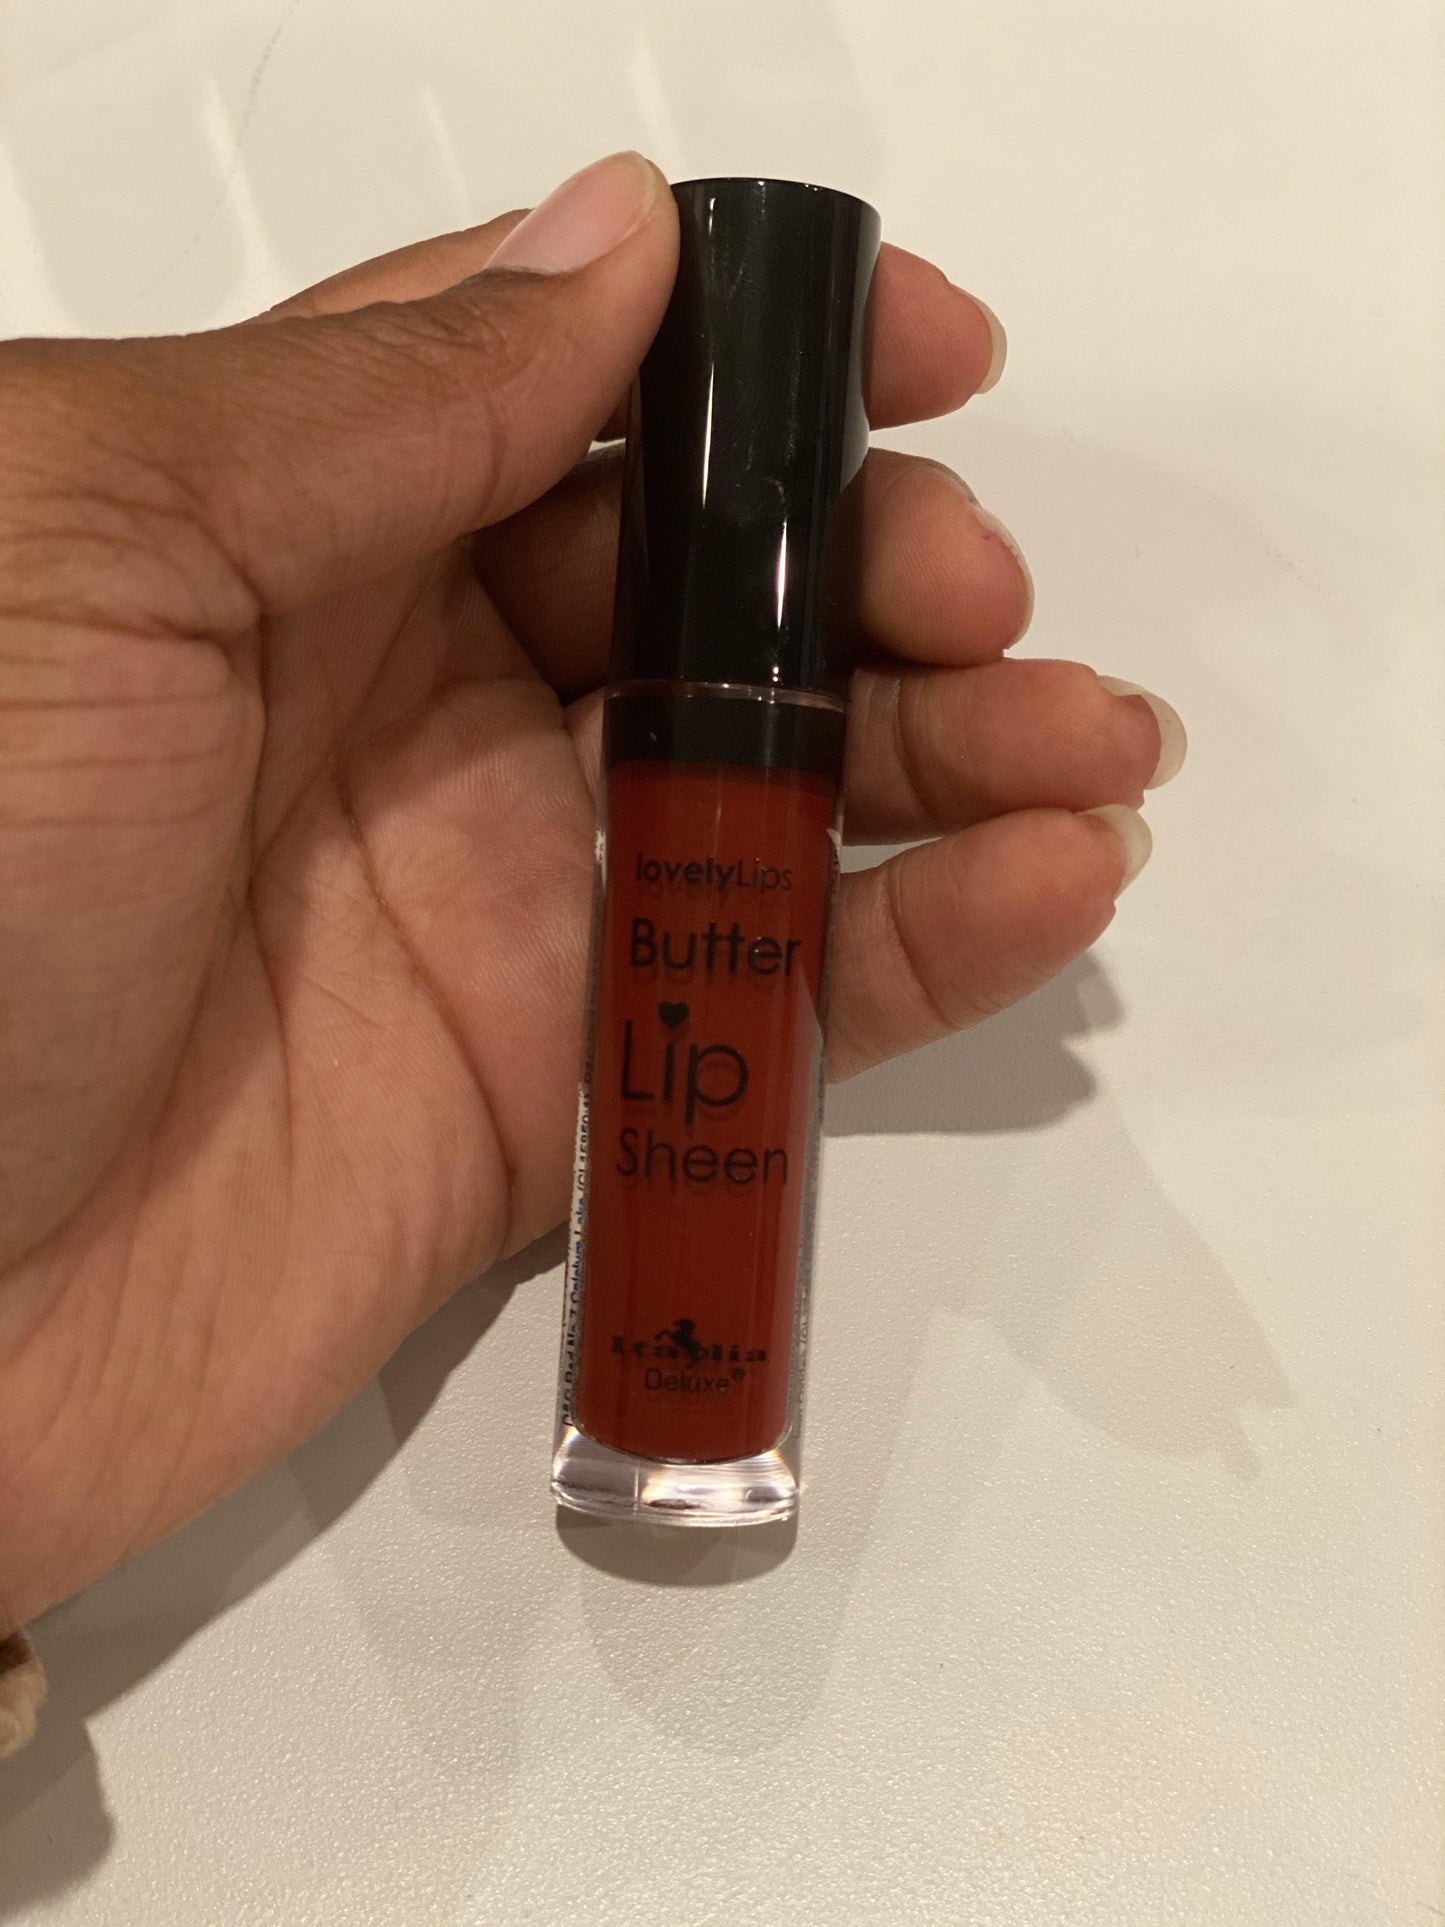 Butter lip sheen-Red queen-Abundance Junky Stylish Clothing Boutique for Women